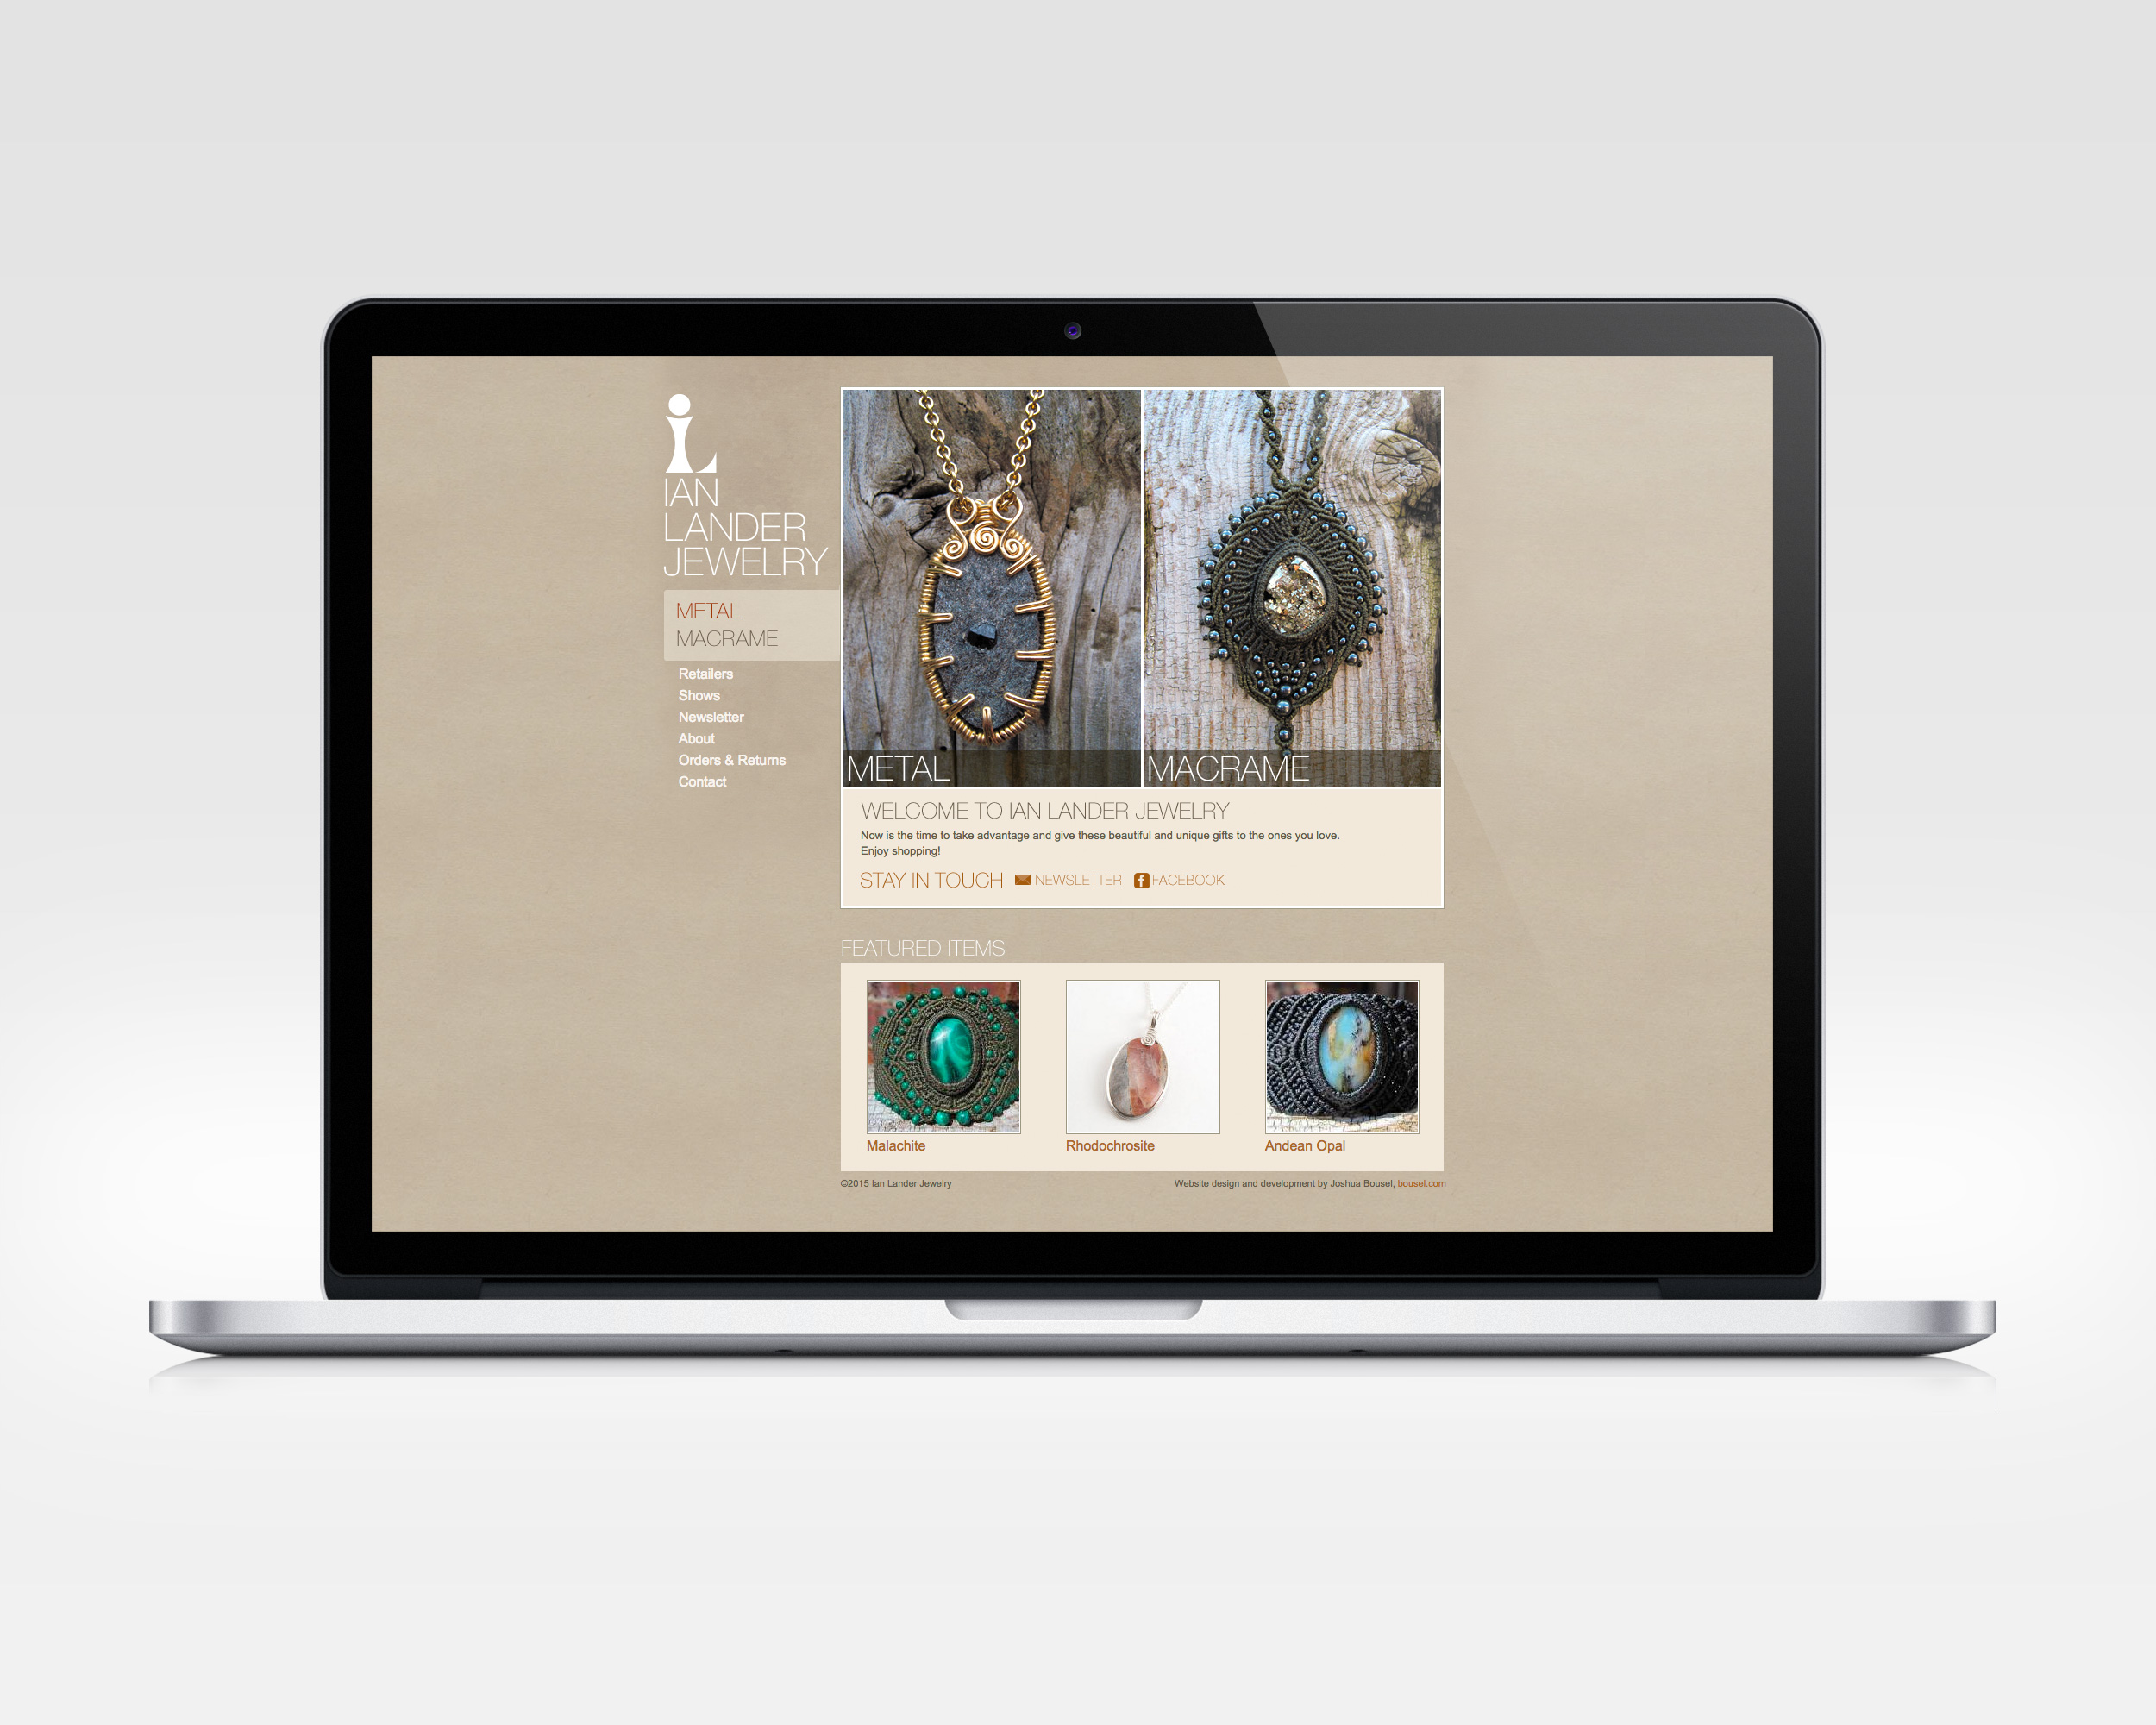   ian lander jewelry   design, ux, development   E-commerce site for jewelry designer.    